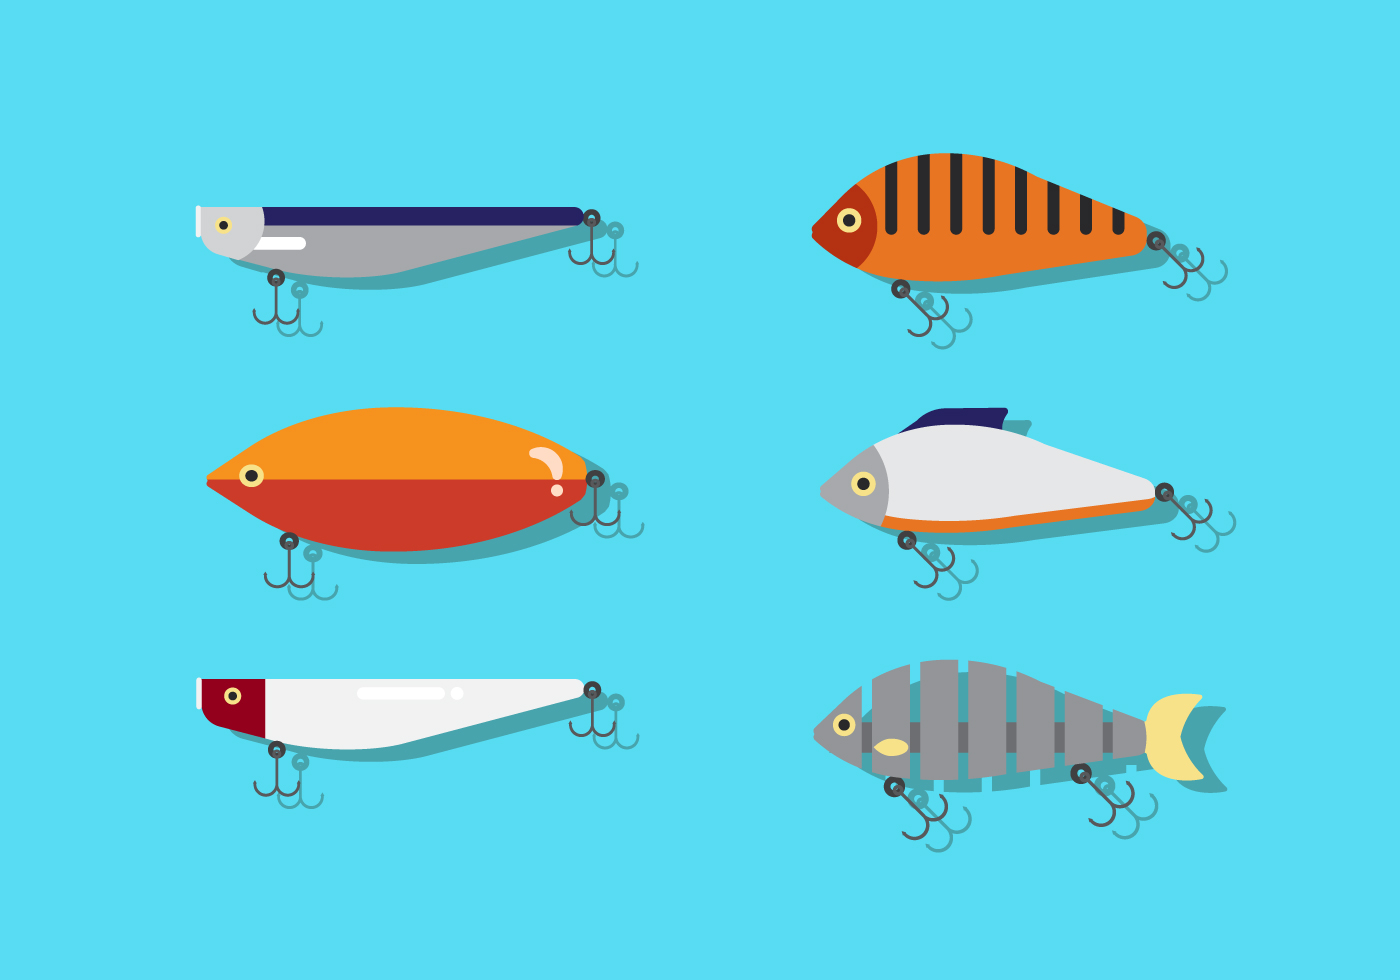 Download Vector Fishing Lure 106830 - Download Free Vectors, Clipart Graphics & Vector Art